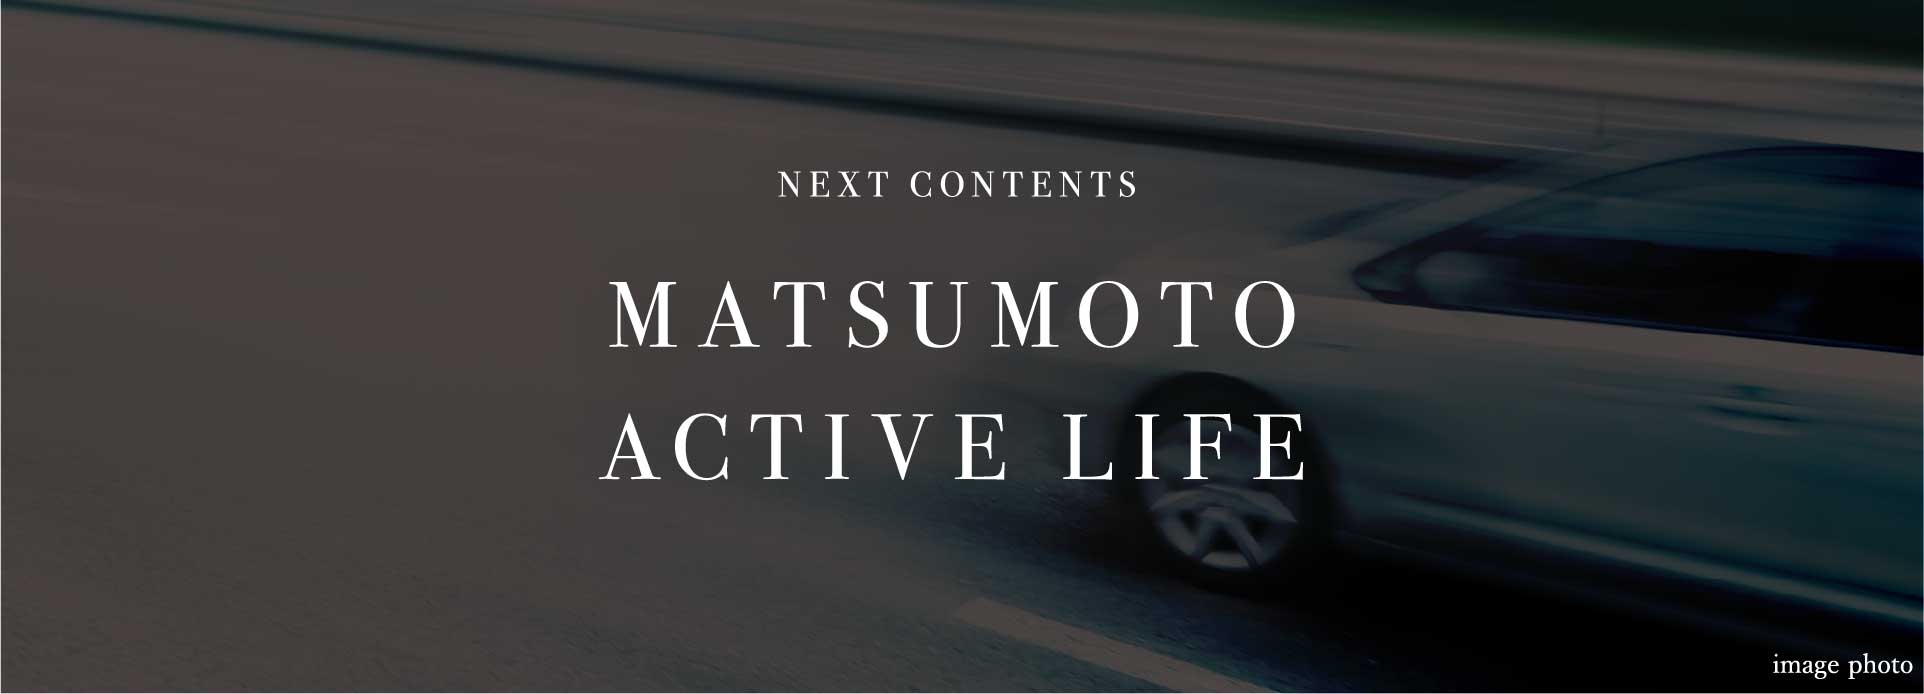 NEXT CONTENTS MATSUMOTO ACTIVE LIFE